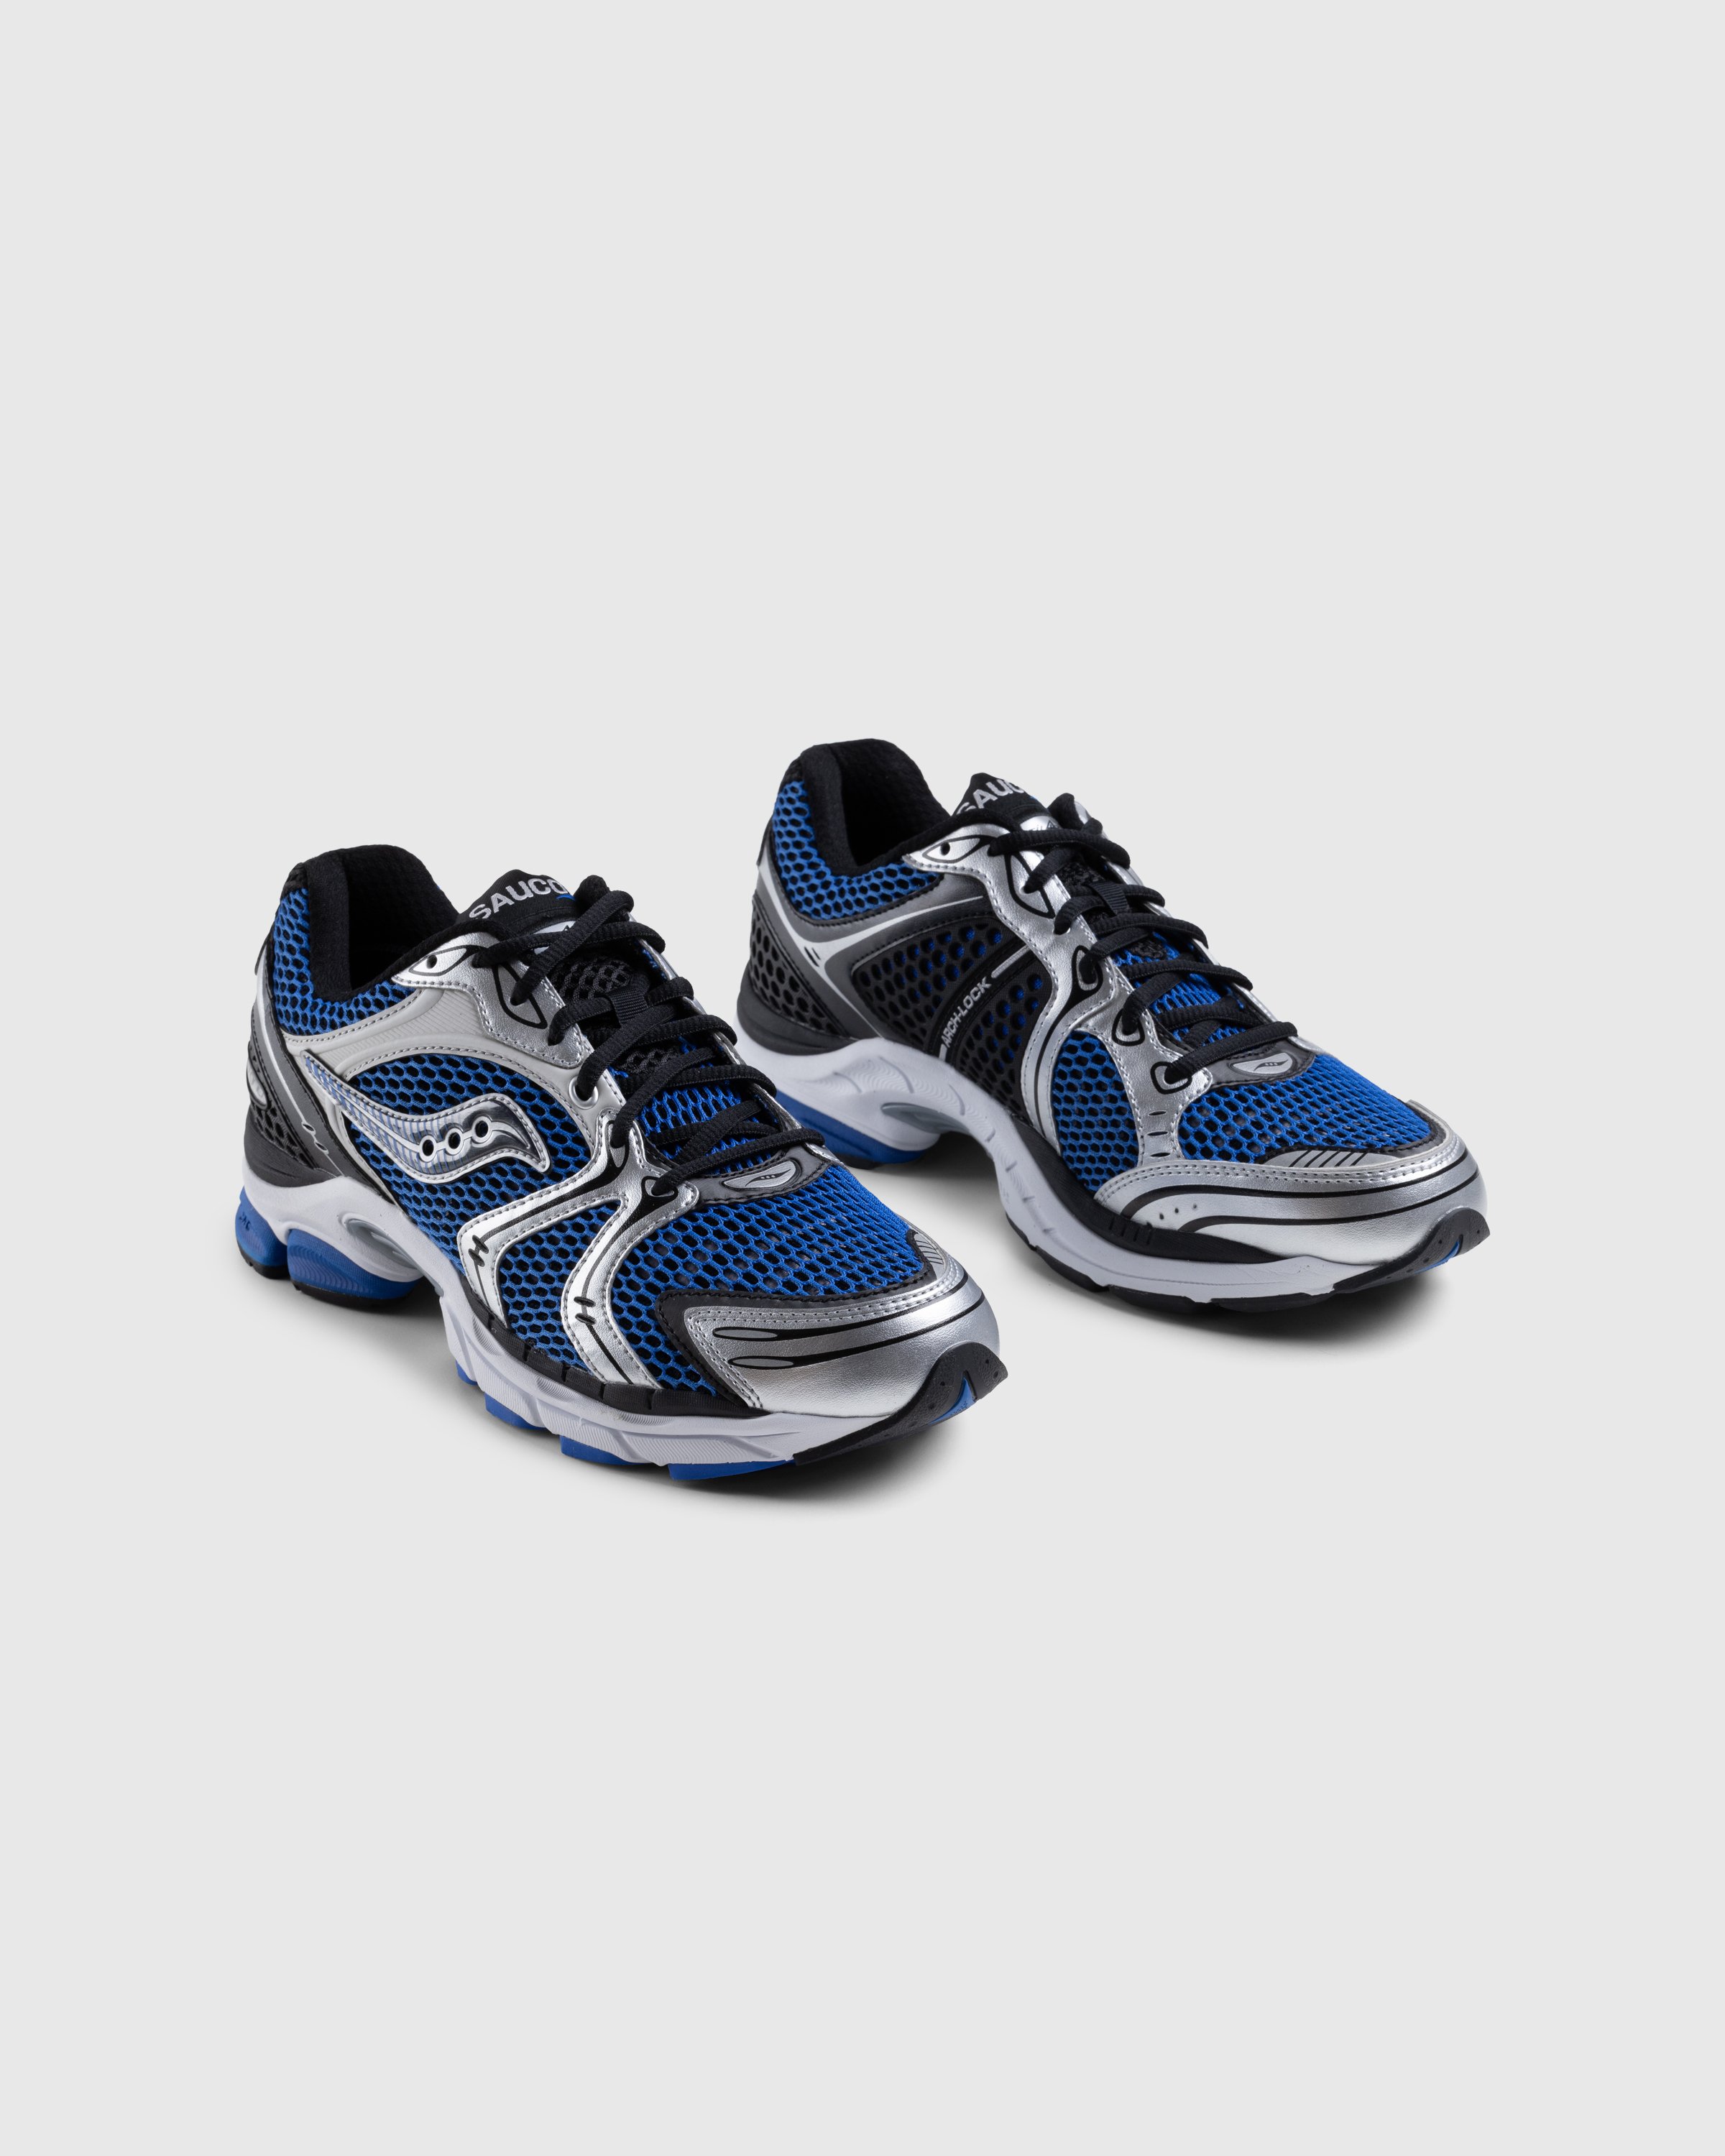 Saucony - ProGrid Triumph 4 Blue/Silver - Footwear - Multi - Image 3